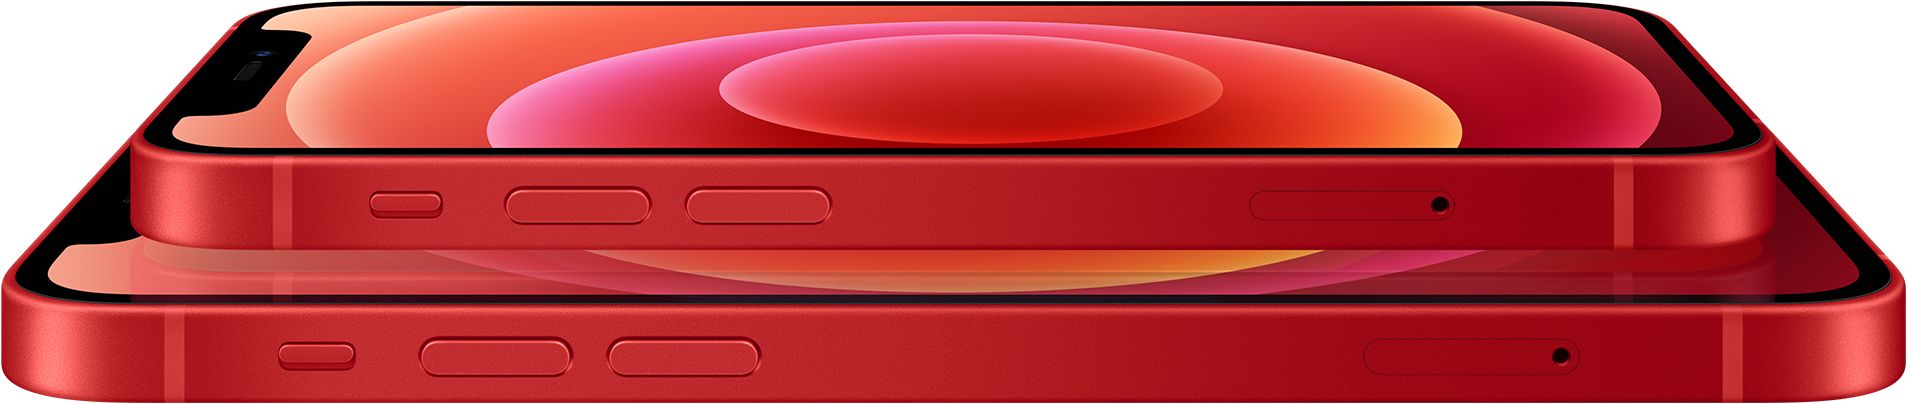 iPhone 12 en Rojo (PRODUCT)RED